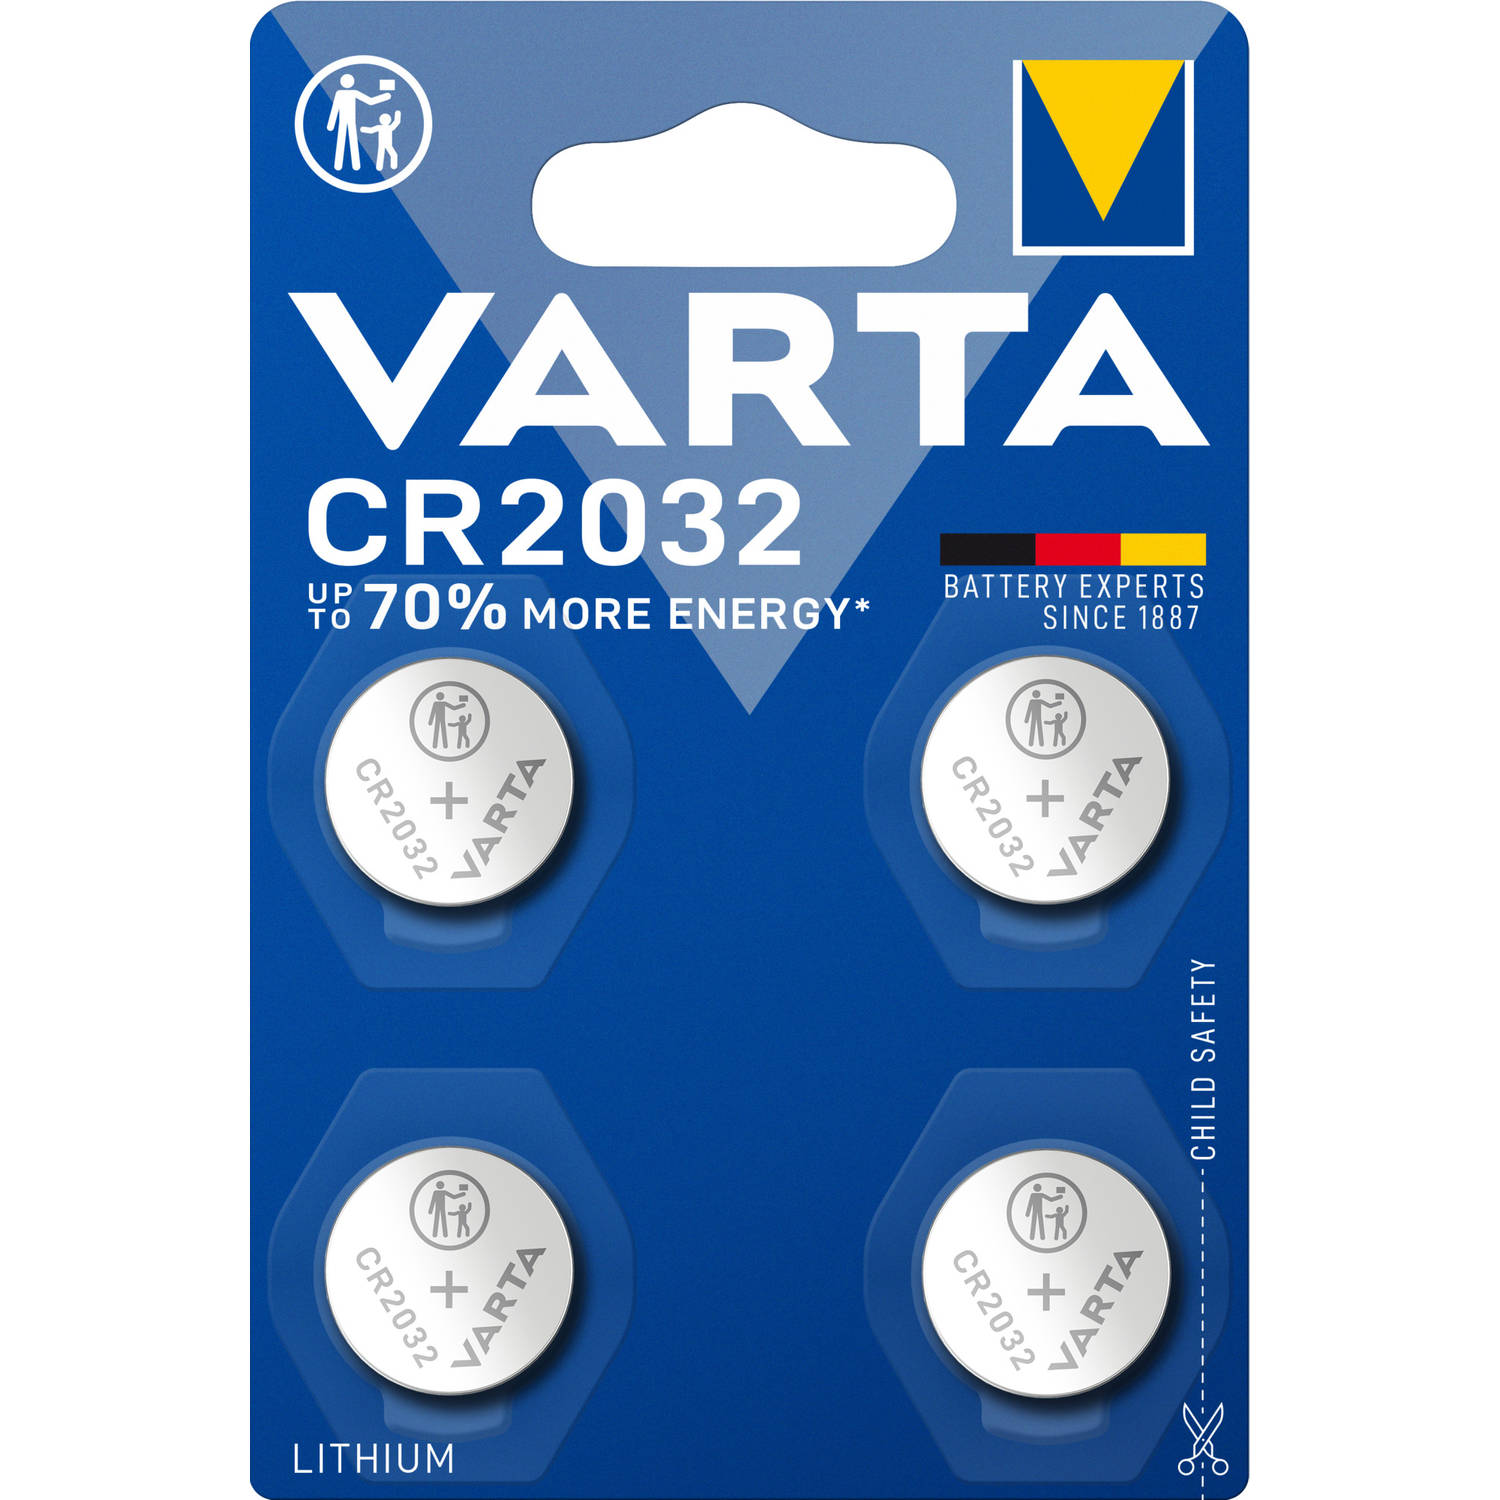 Varta Lithium knoopcel CR2032 Blister 4